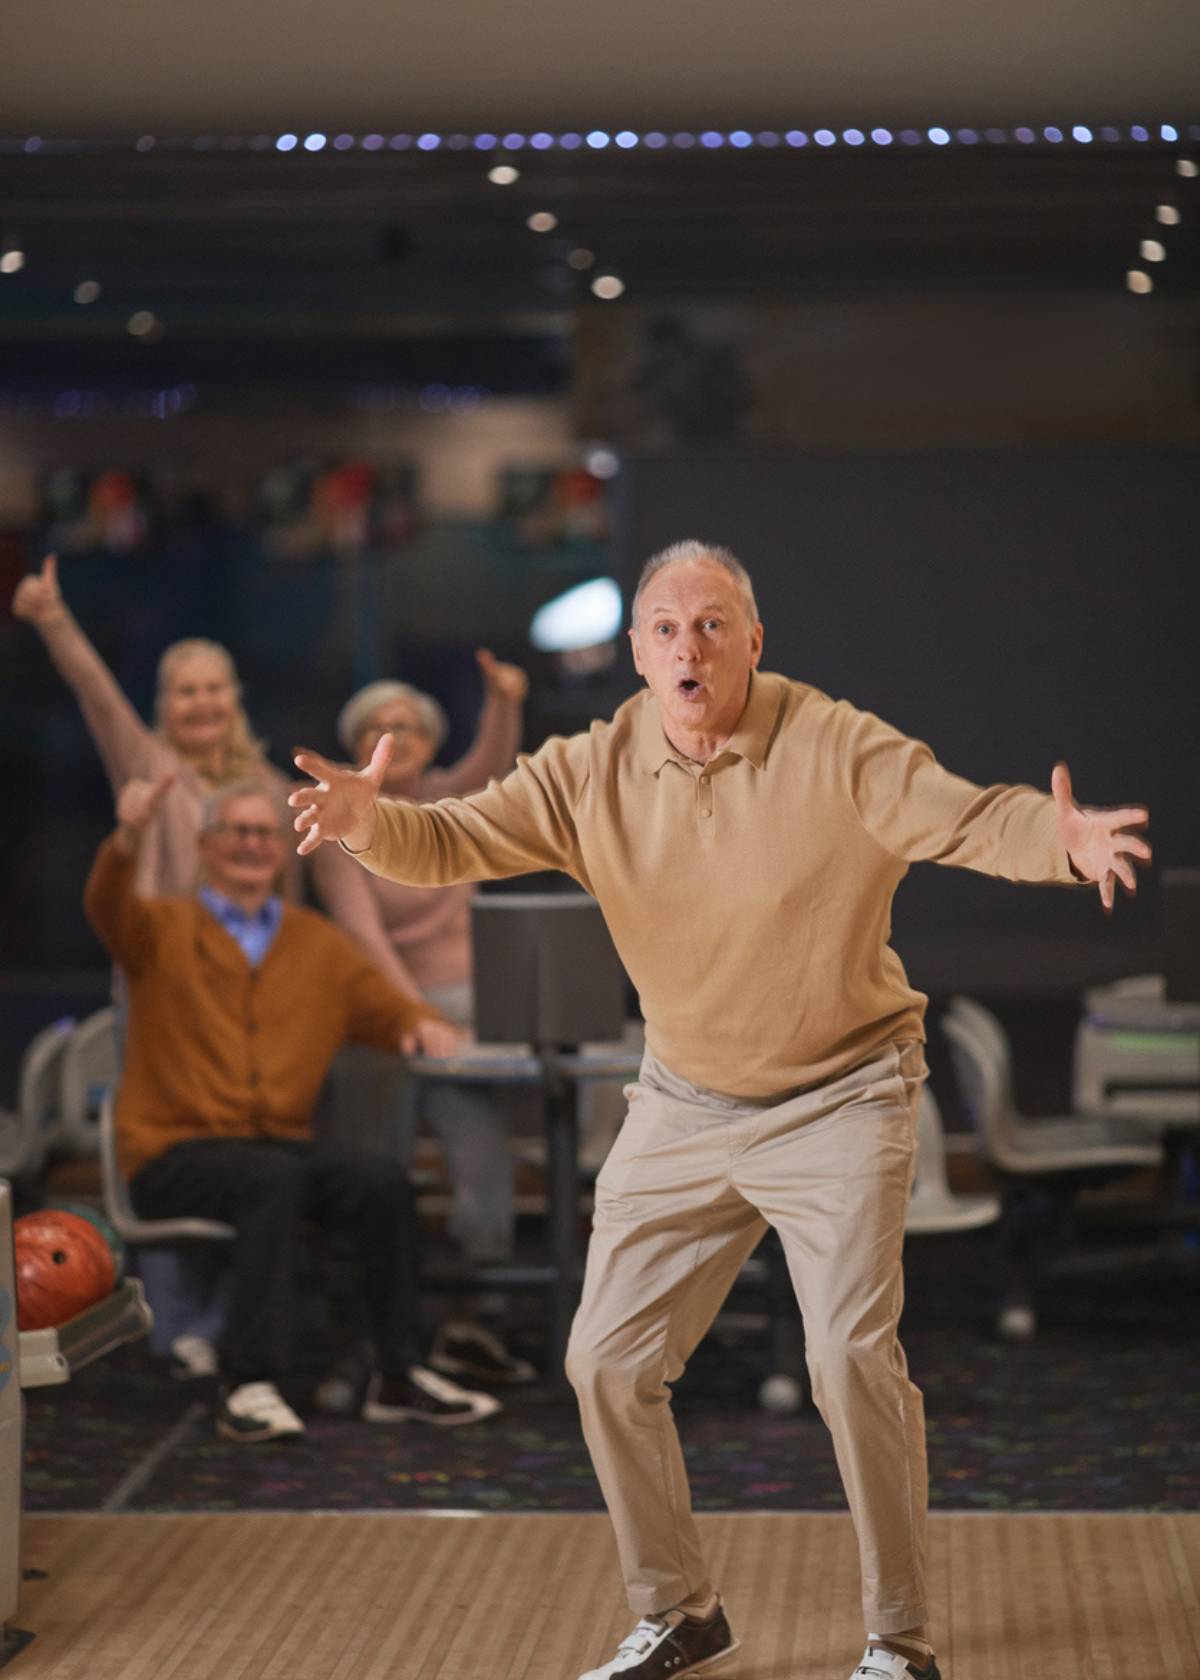 Bowling tips for seniors